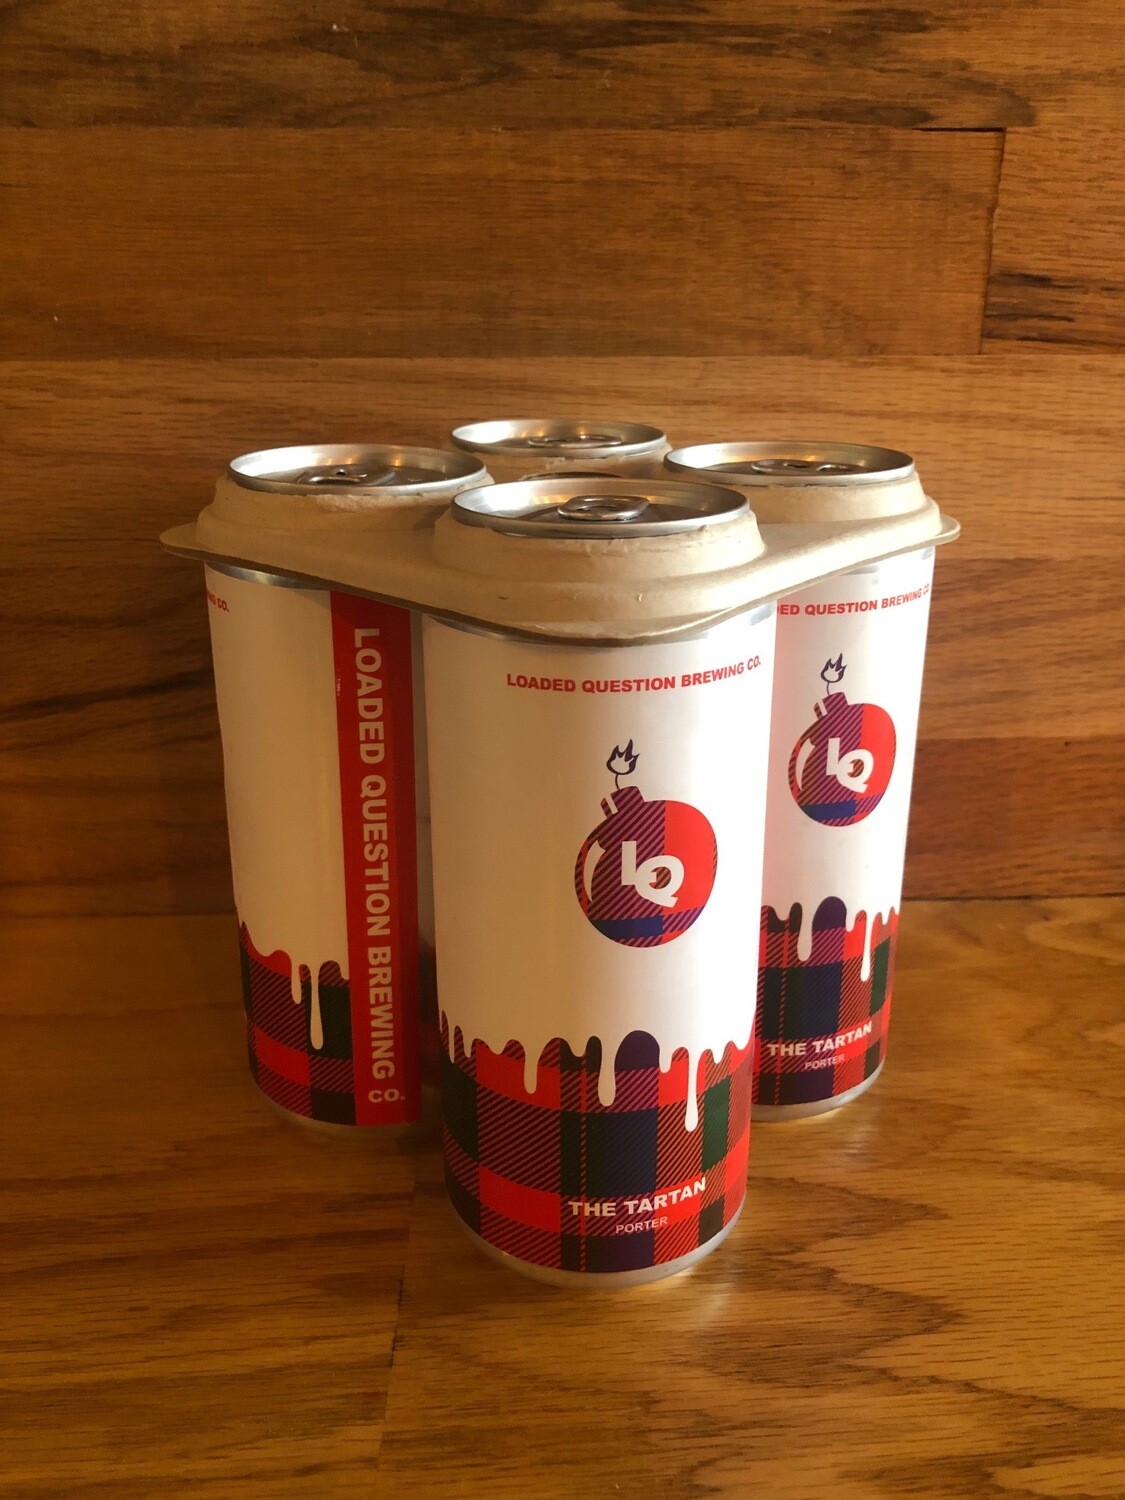 Tartan Porter, 5.5% - 4 pack / 16 oz. cans